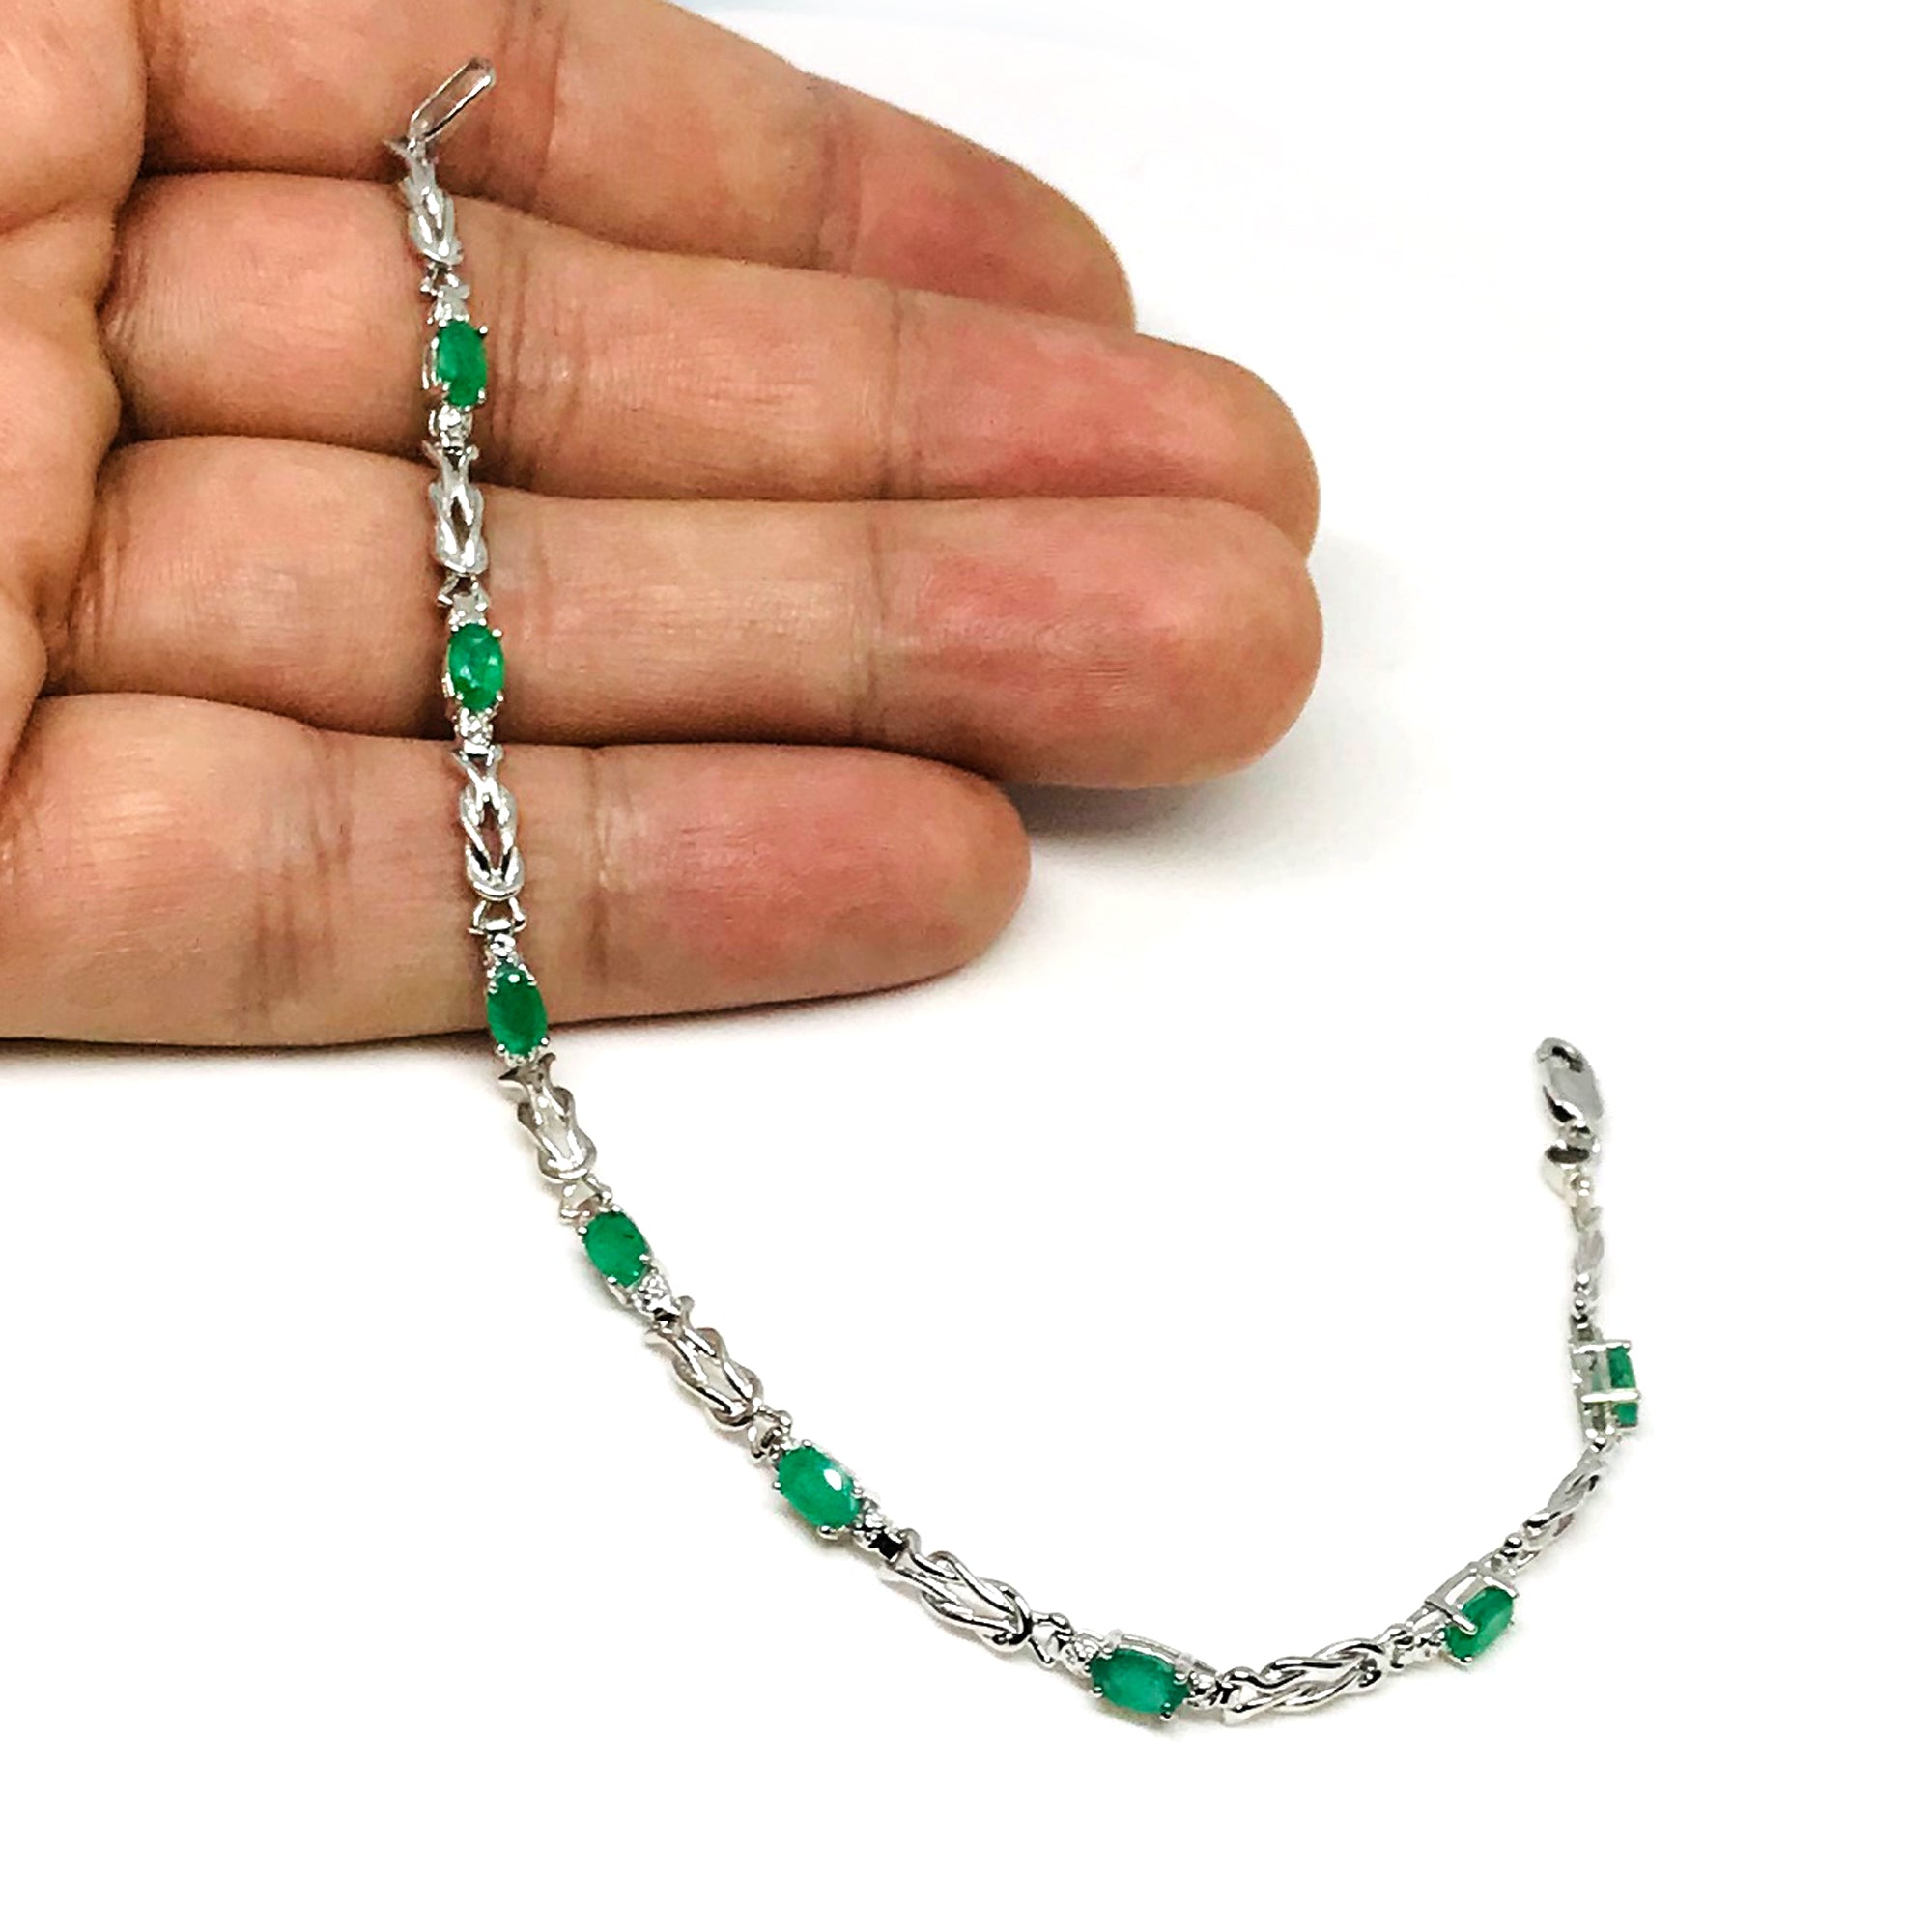 14K White Gold Oval Emerald Stones And Diamonds Tennis Bracelet, 7" fine designer jewelry for men and women